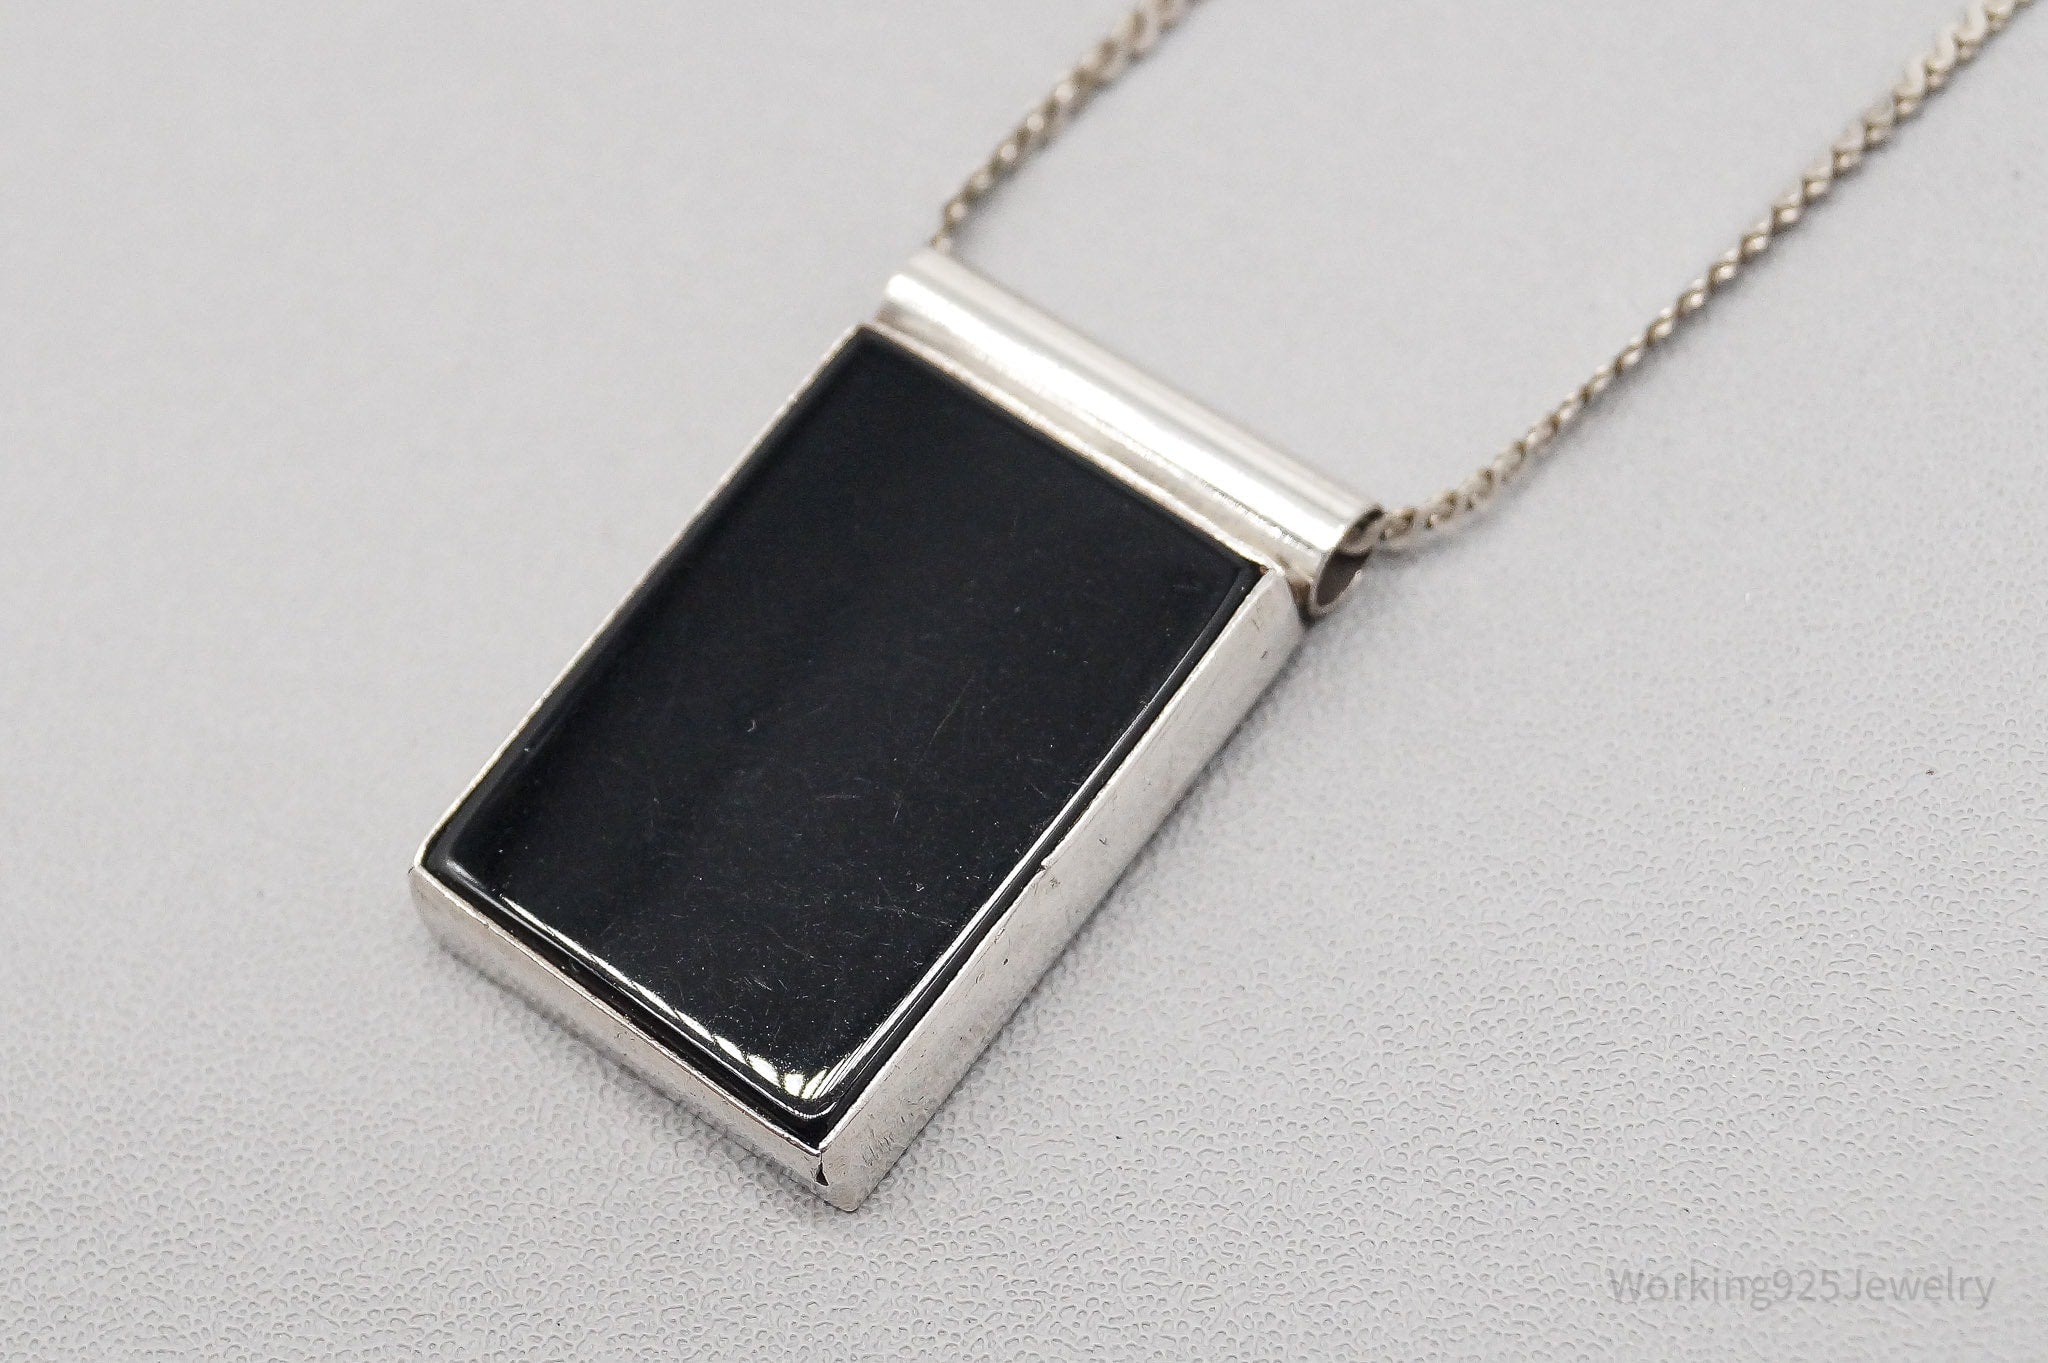 Vintage Black Onyx Sterling Silver Necklace - 16"